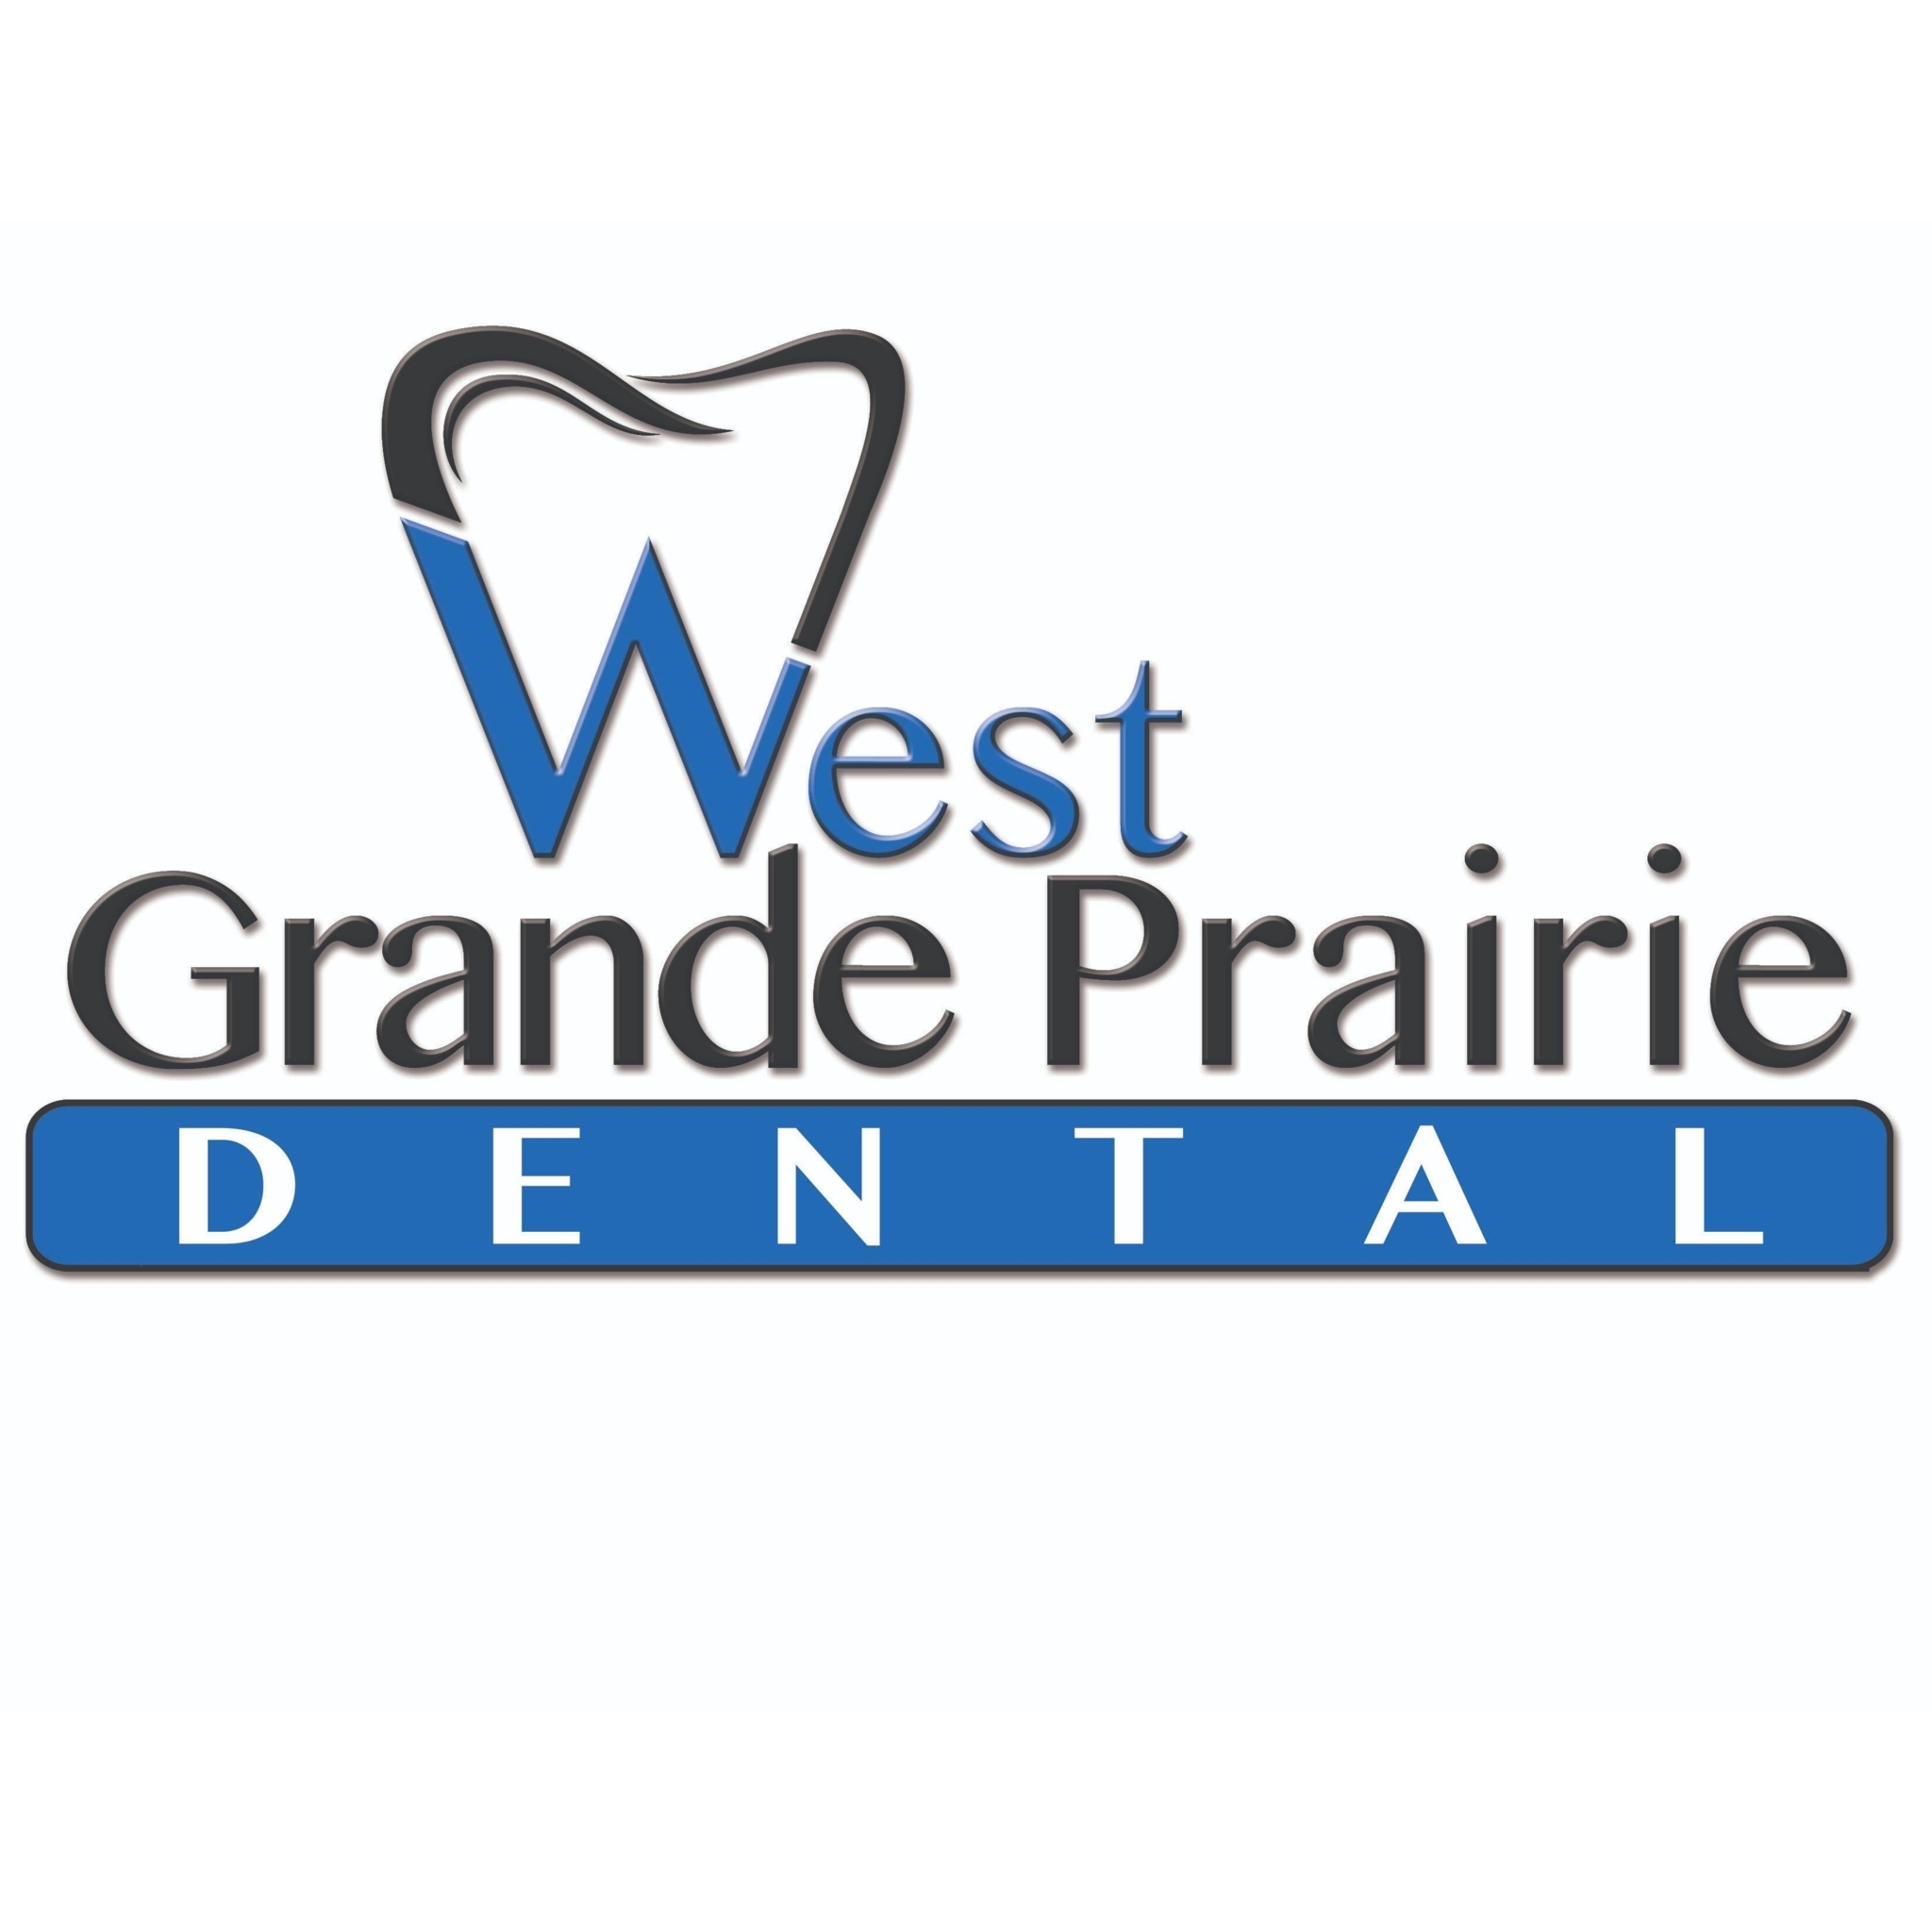 West Grande Prairie Dental - Invisalign and Implant Dentist - Westgate - Dentists